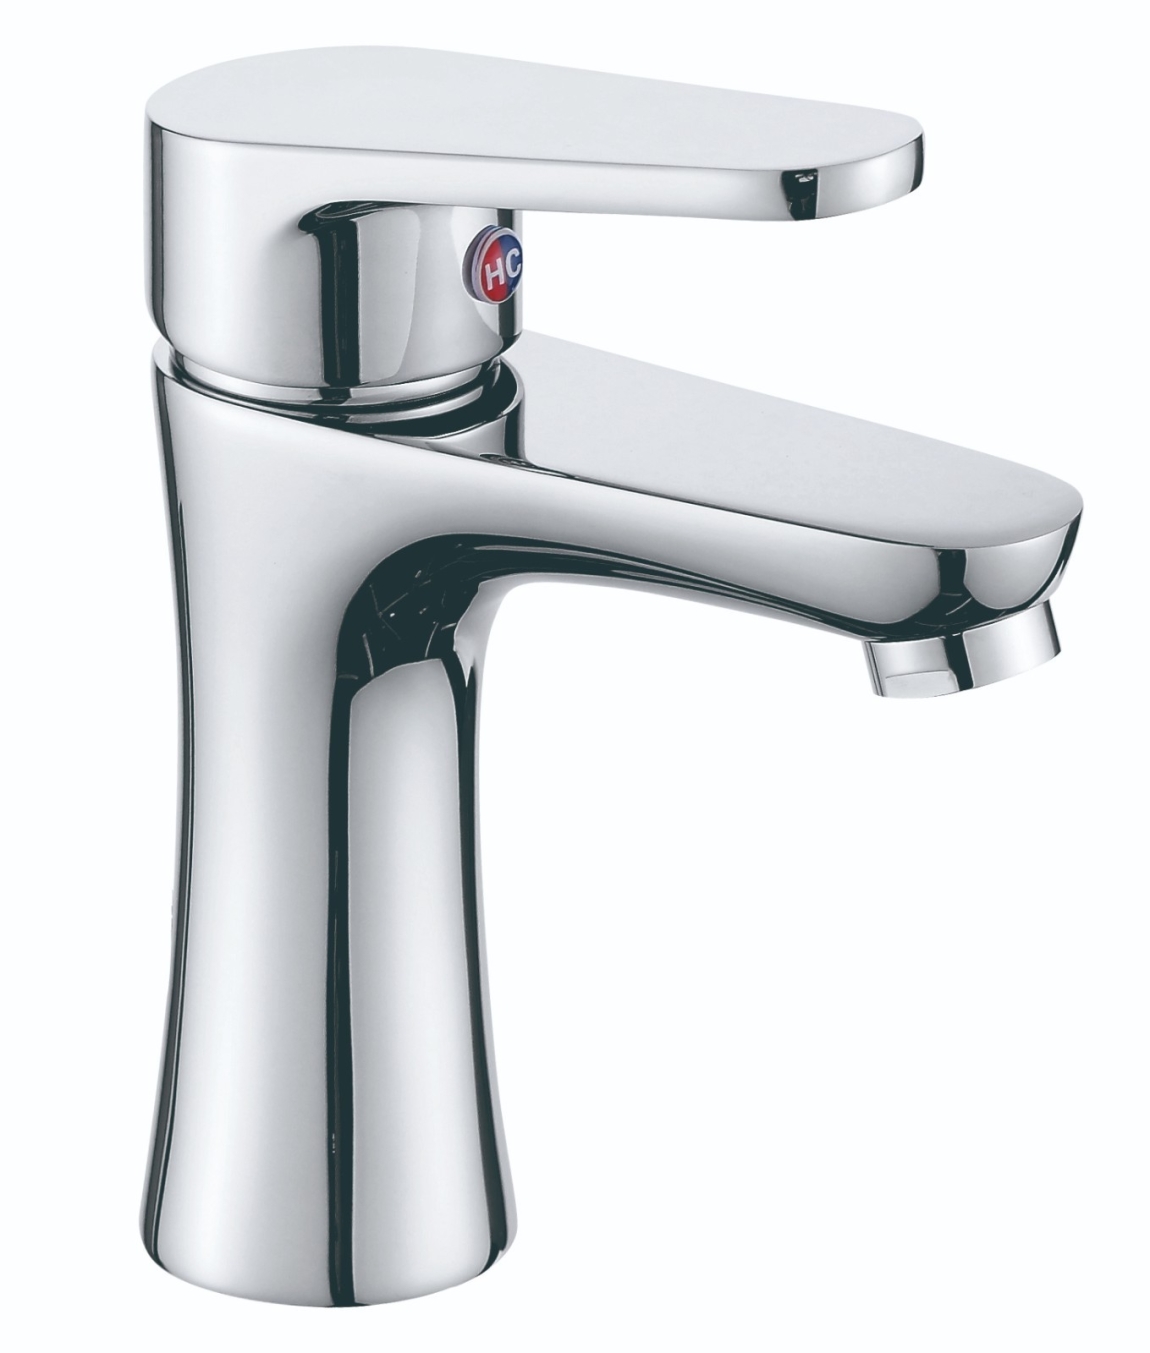 OUTAI OT 31022 BASIN COLD TAP Basin Water Tap Bathroom / Washroom Choose Sample / Pattern Chart